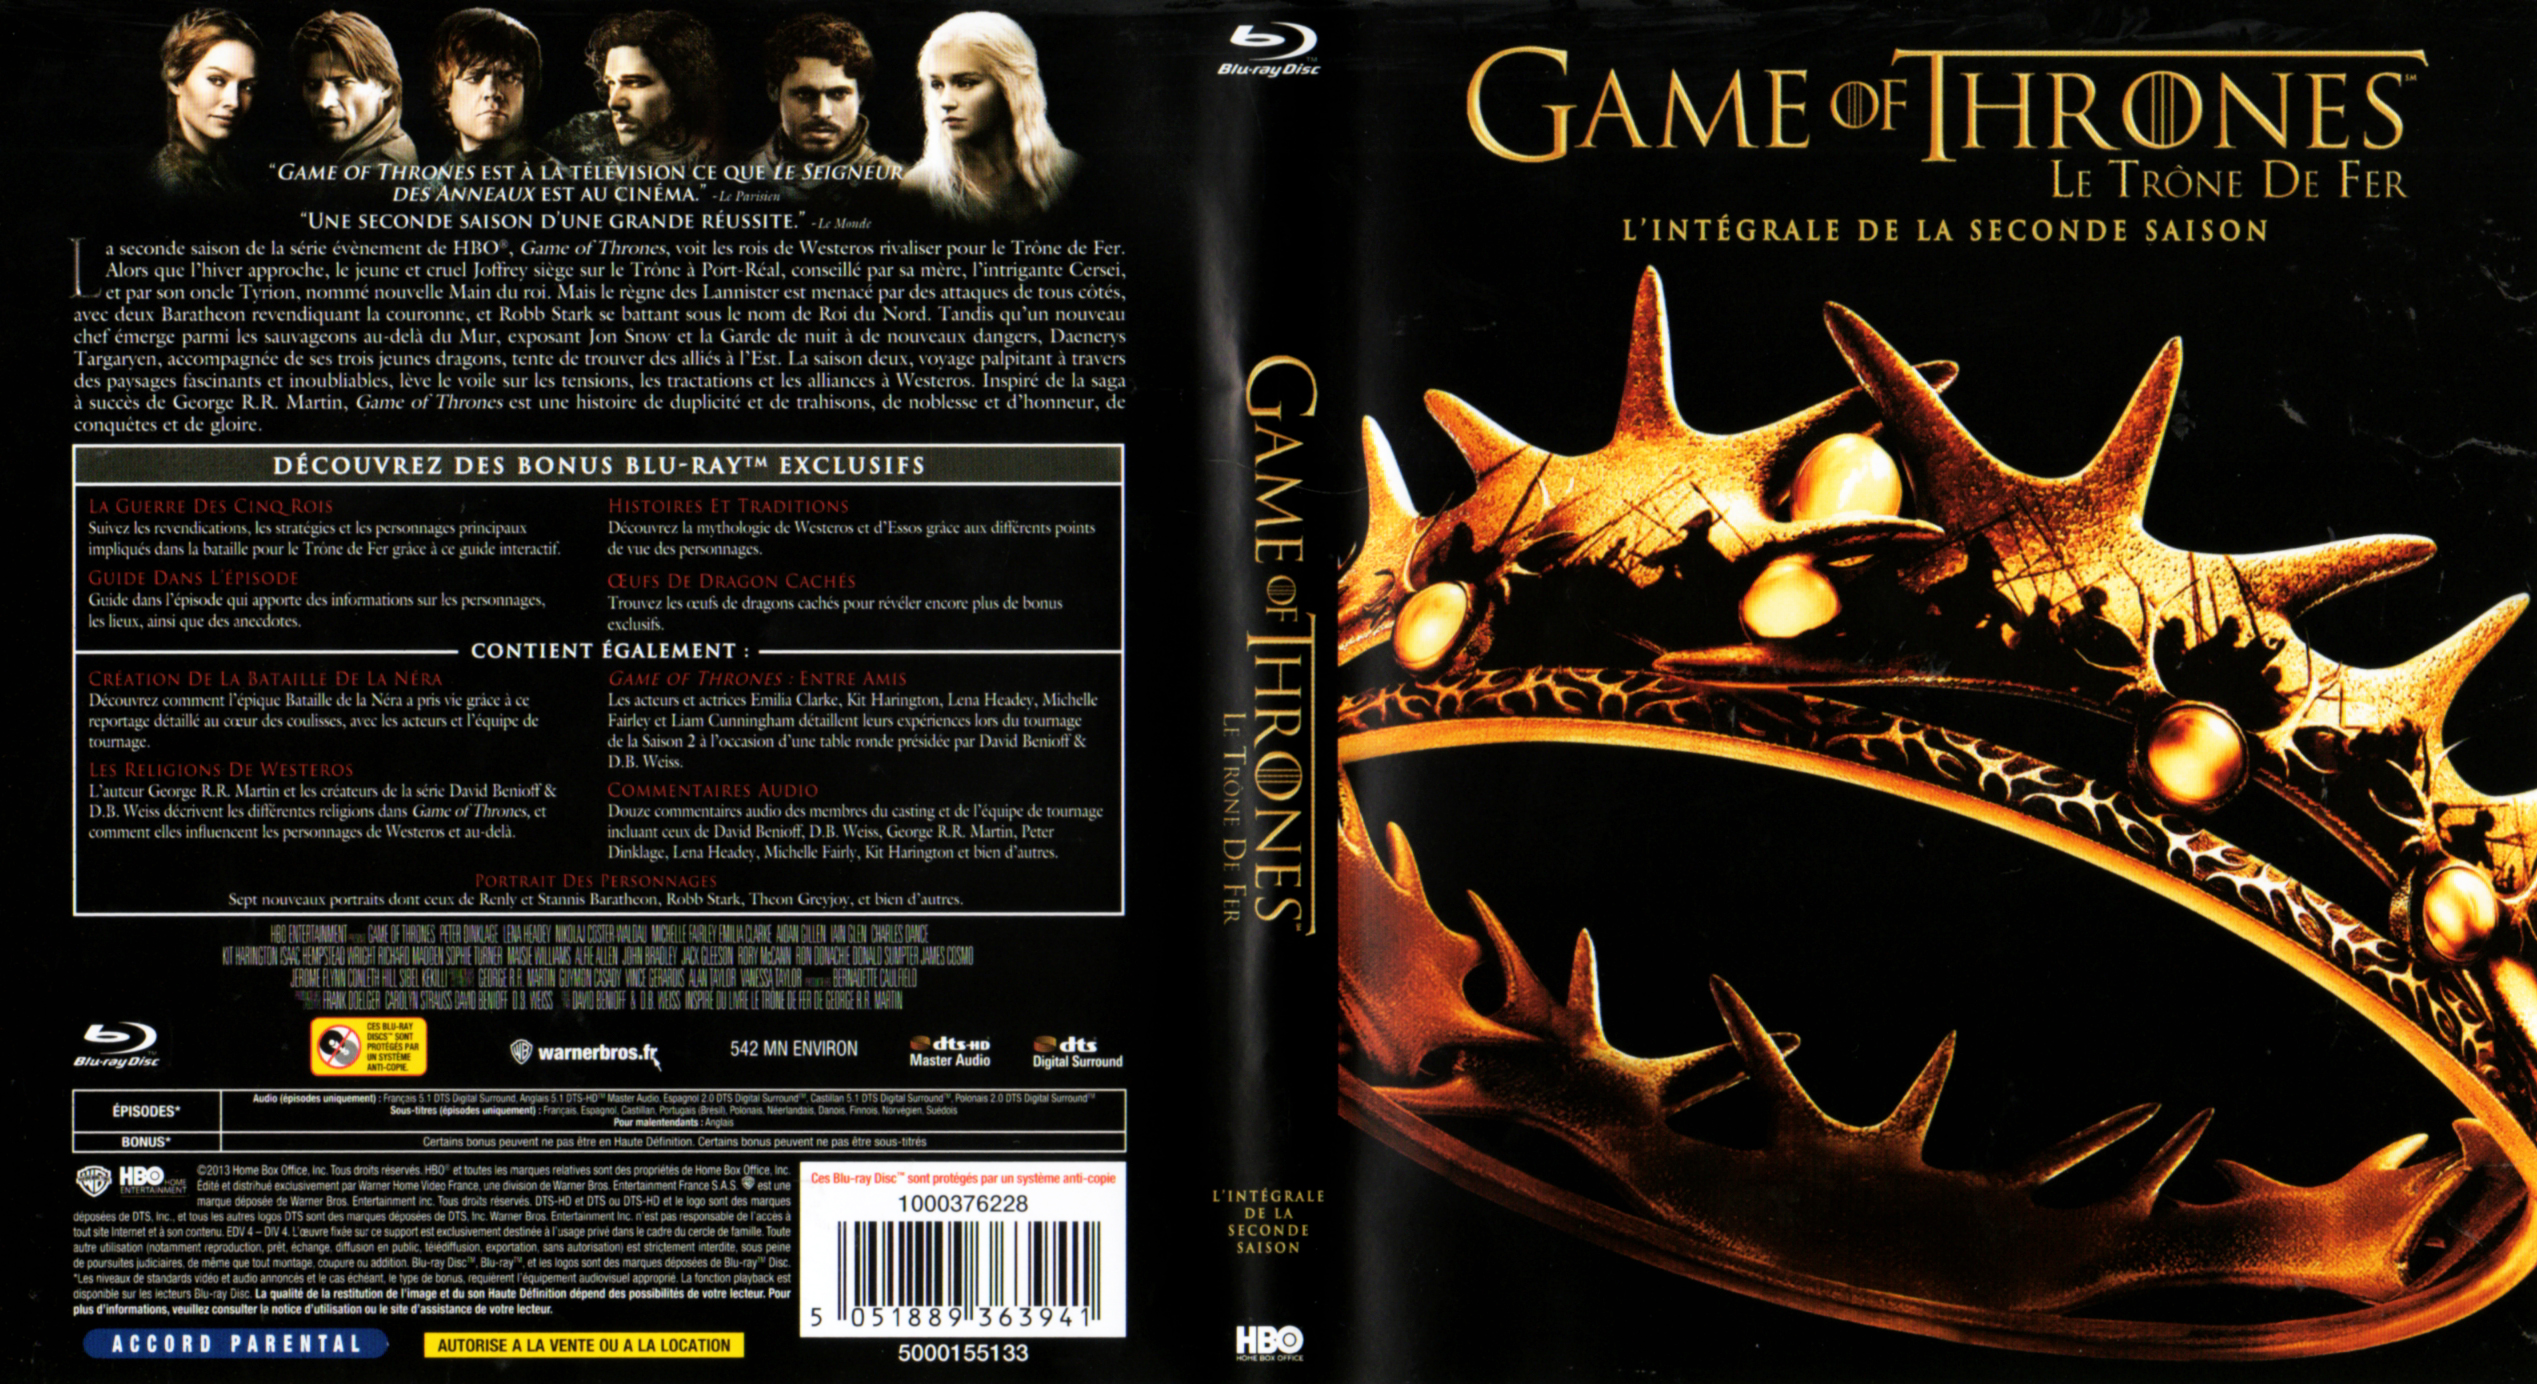 Jaquette DVD Game of thrones (le trone de fer) Saison 1 (BLU-RAY) v2